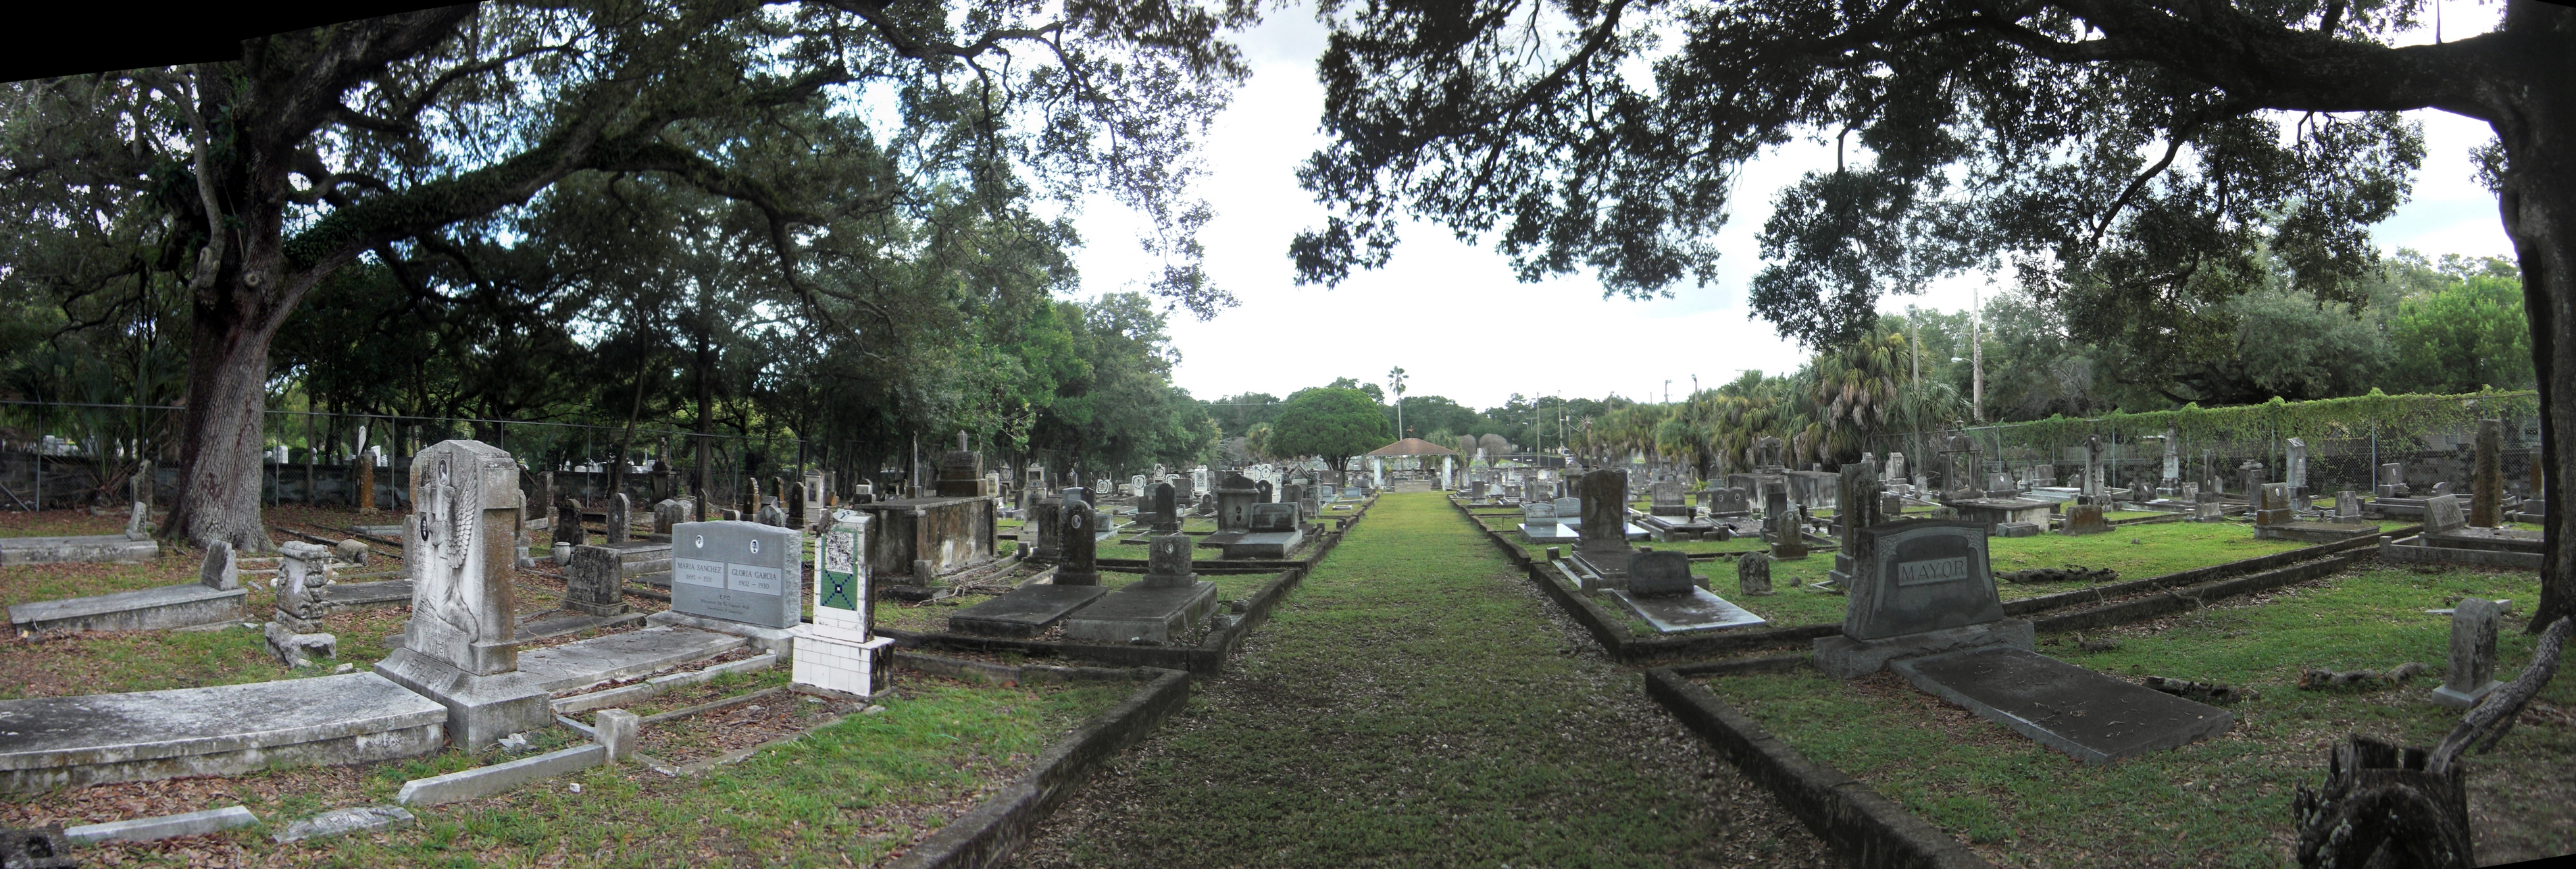 Centro Asturiano Cemetery (old) in Tampa, Florida - Find A Grave ...